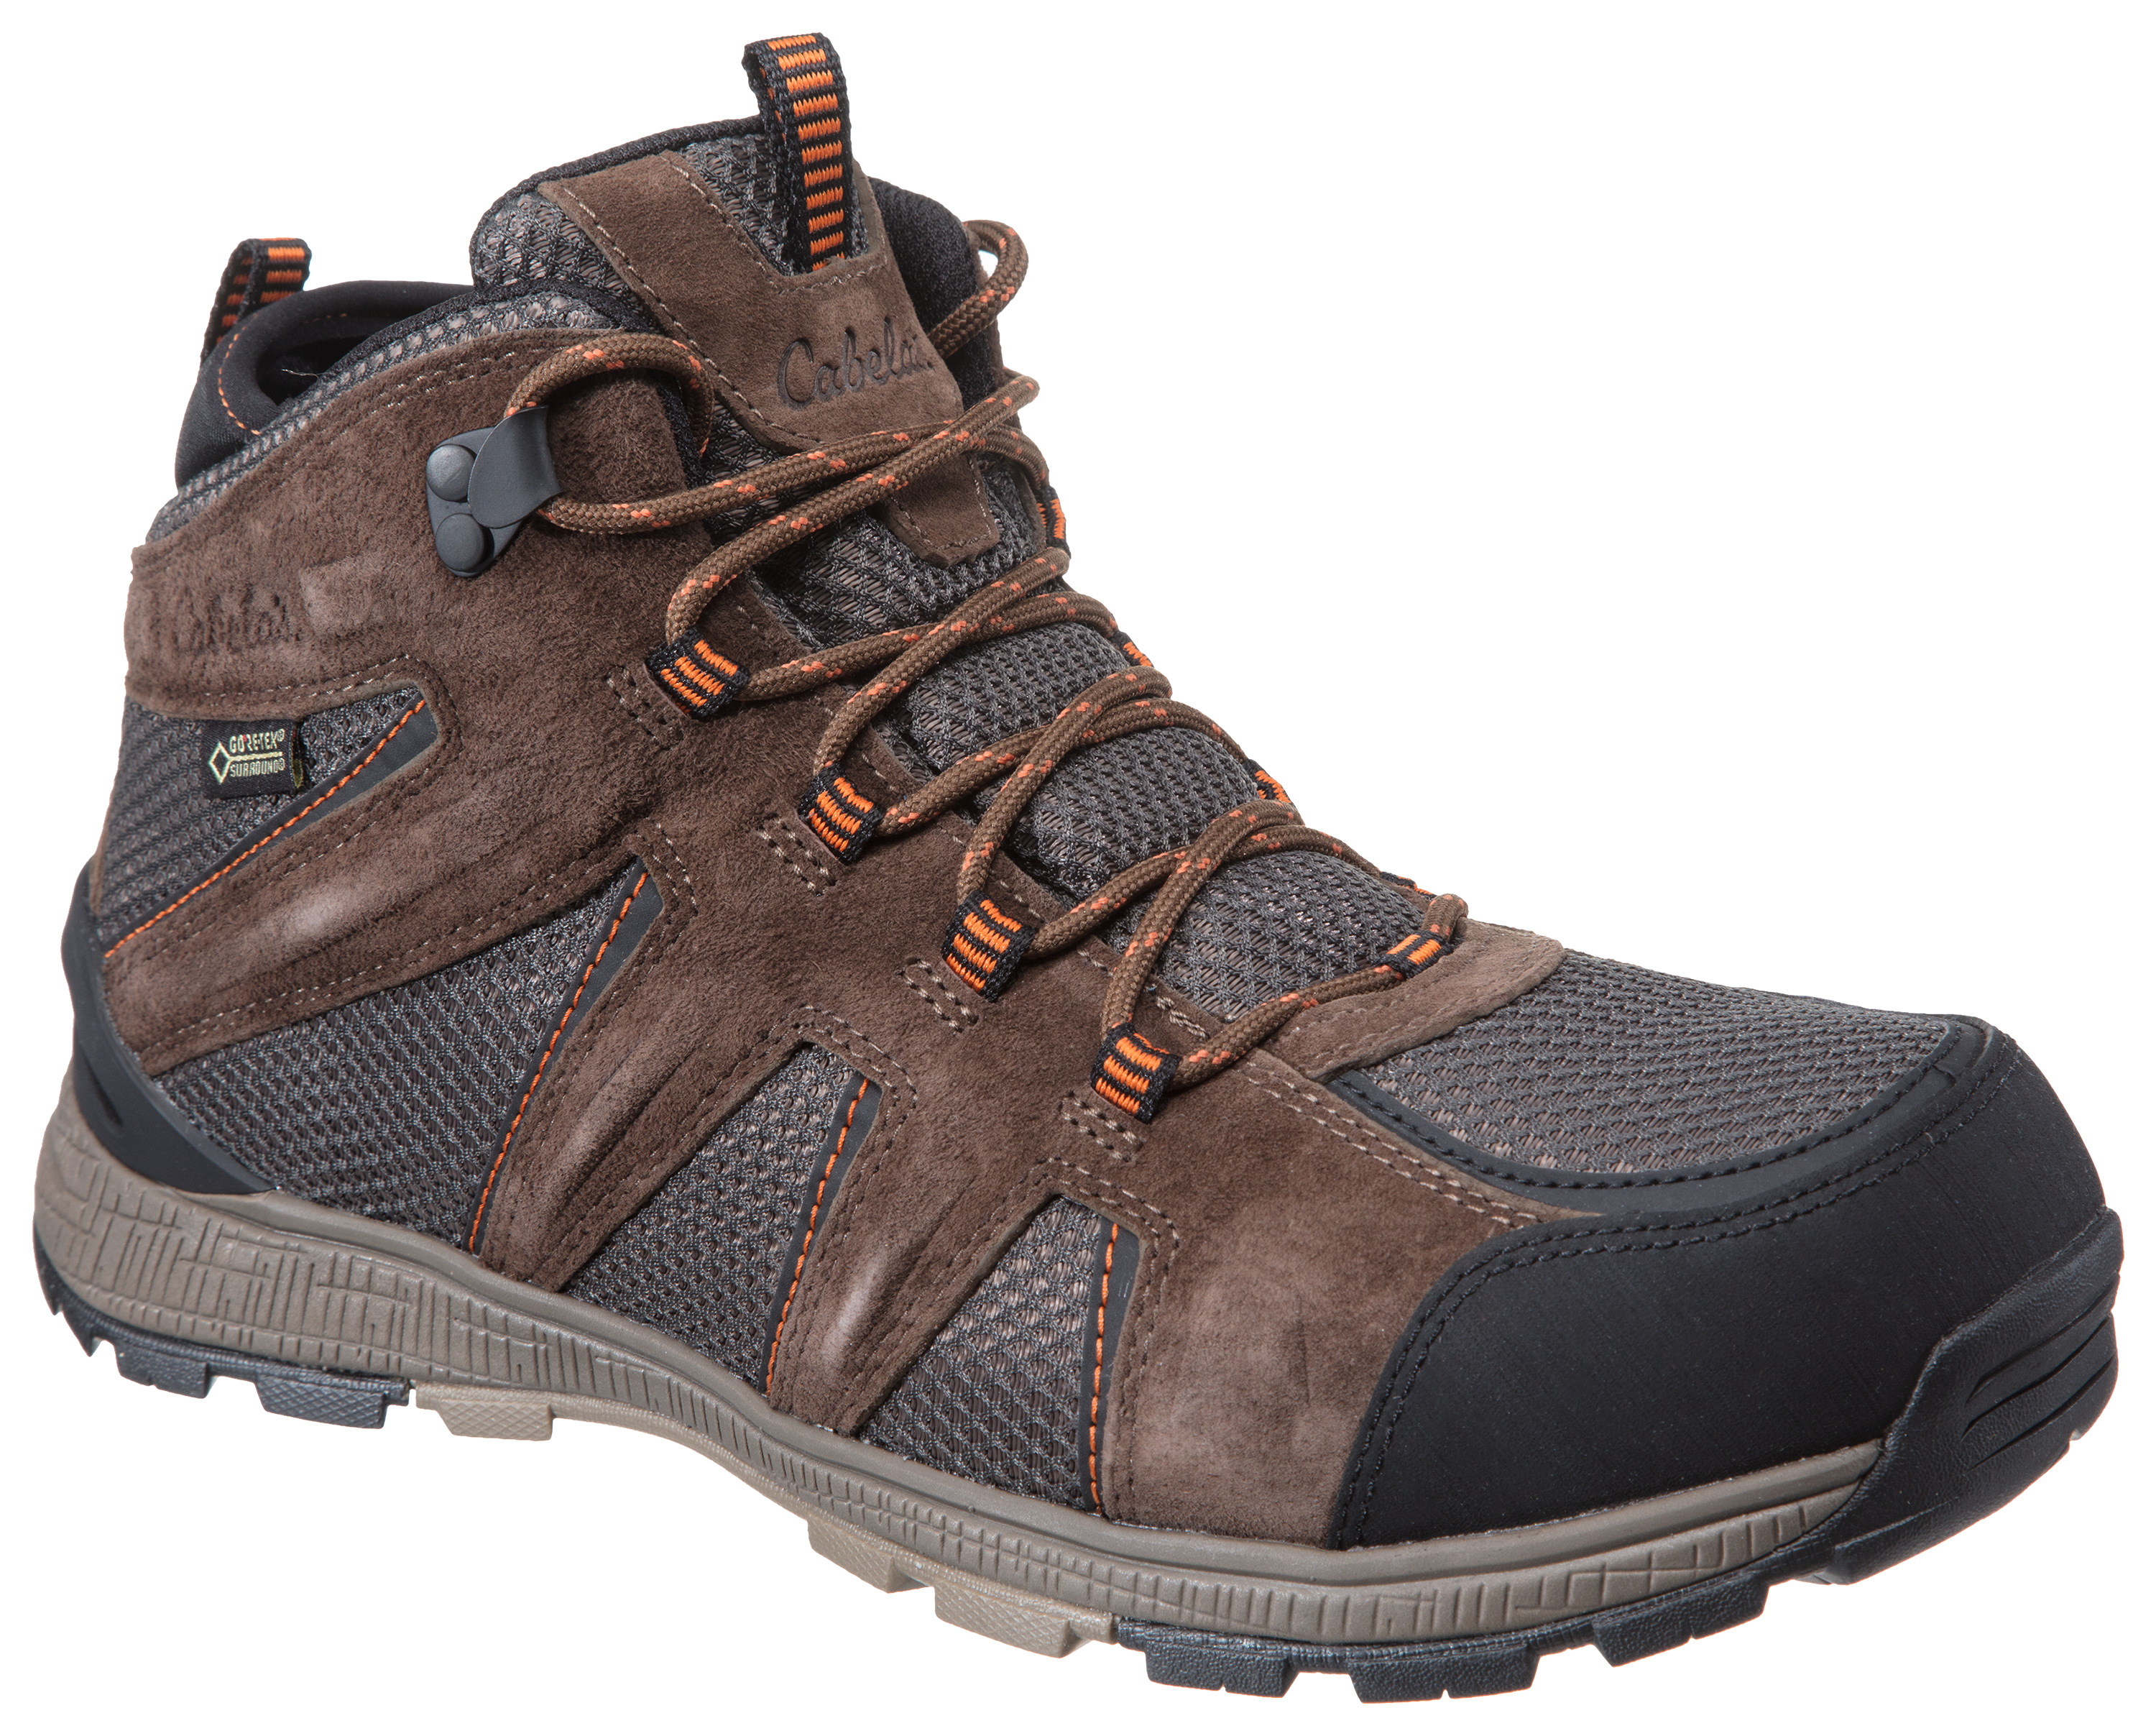 Cabela's 360 Mid GORE-TEX Hiking Boots for Men - Teak - 11M